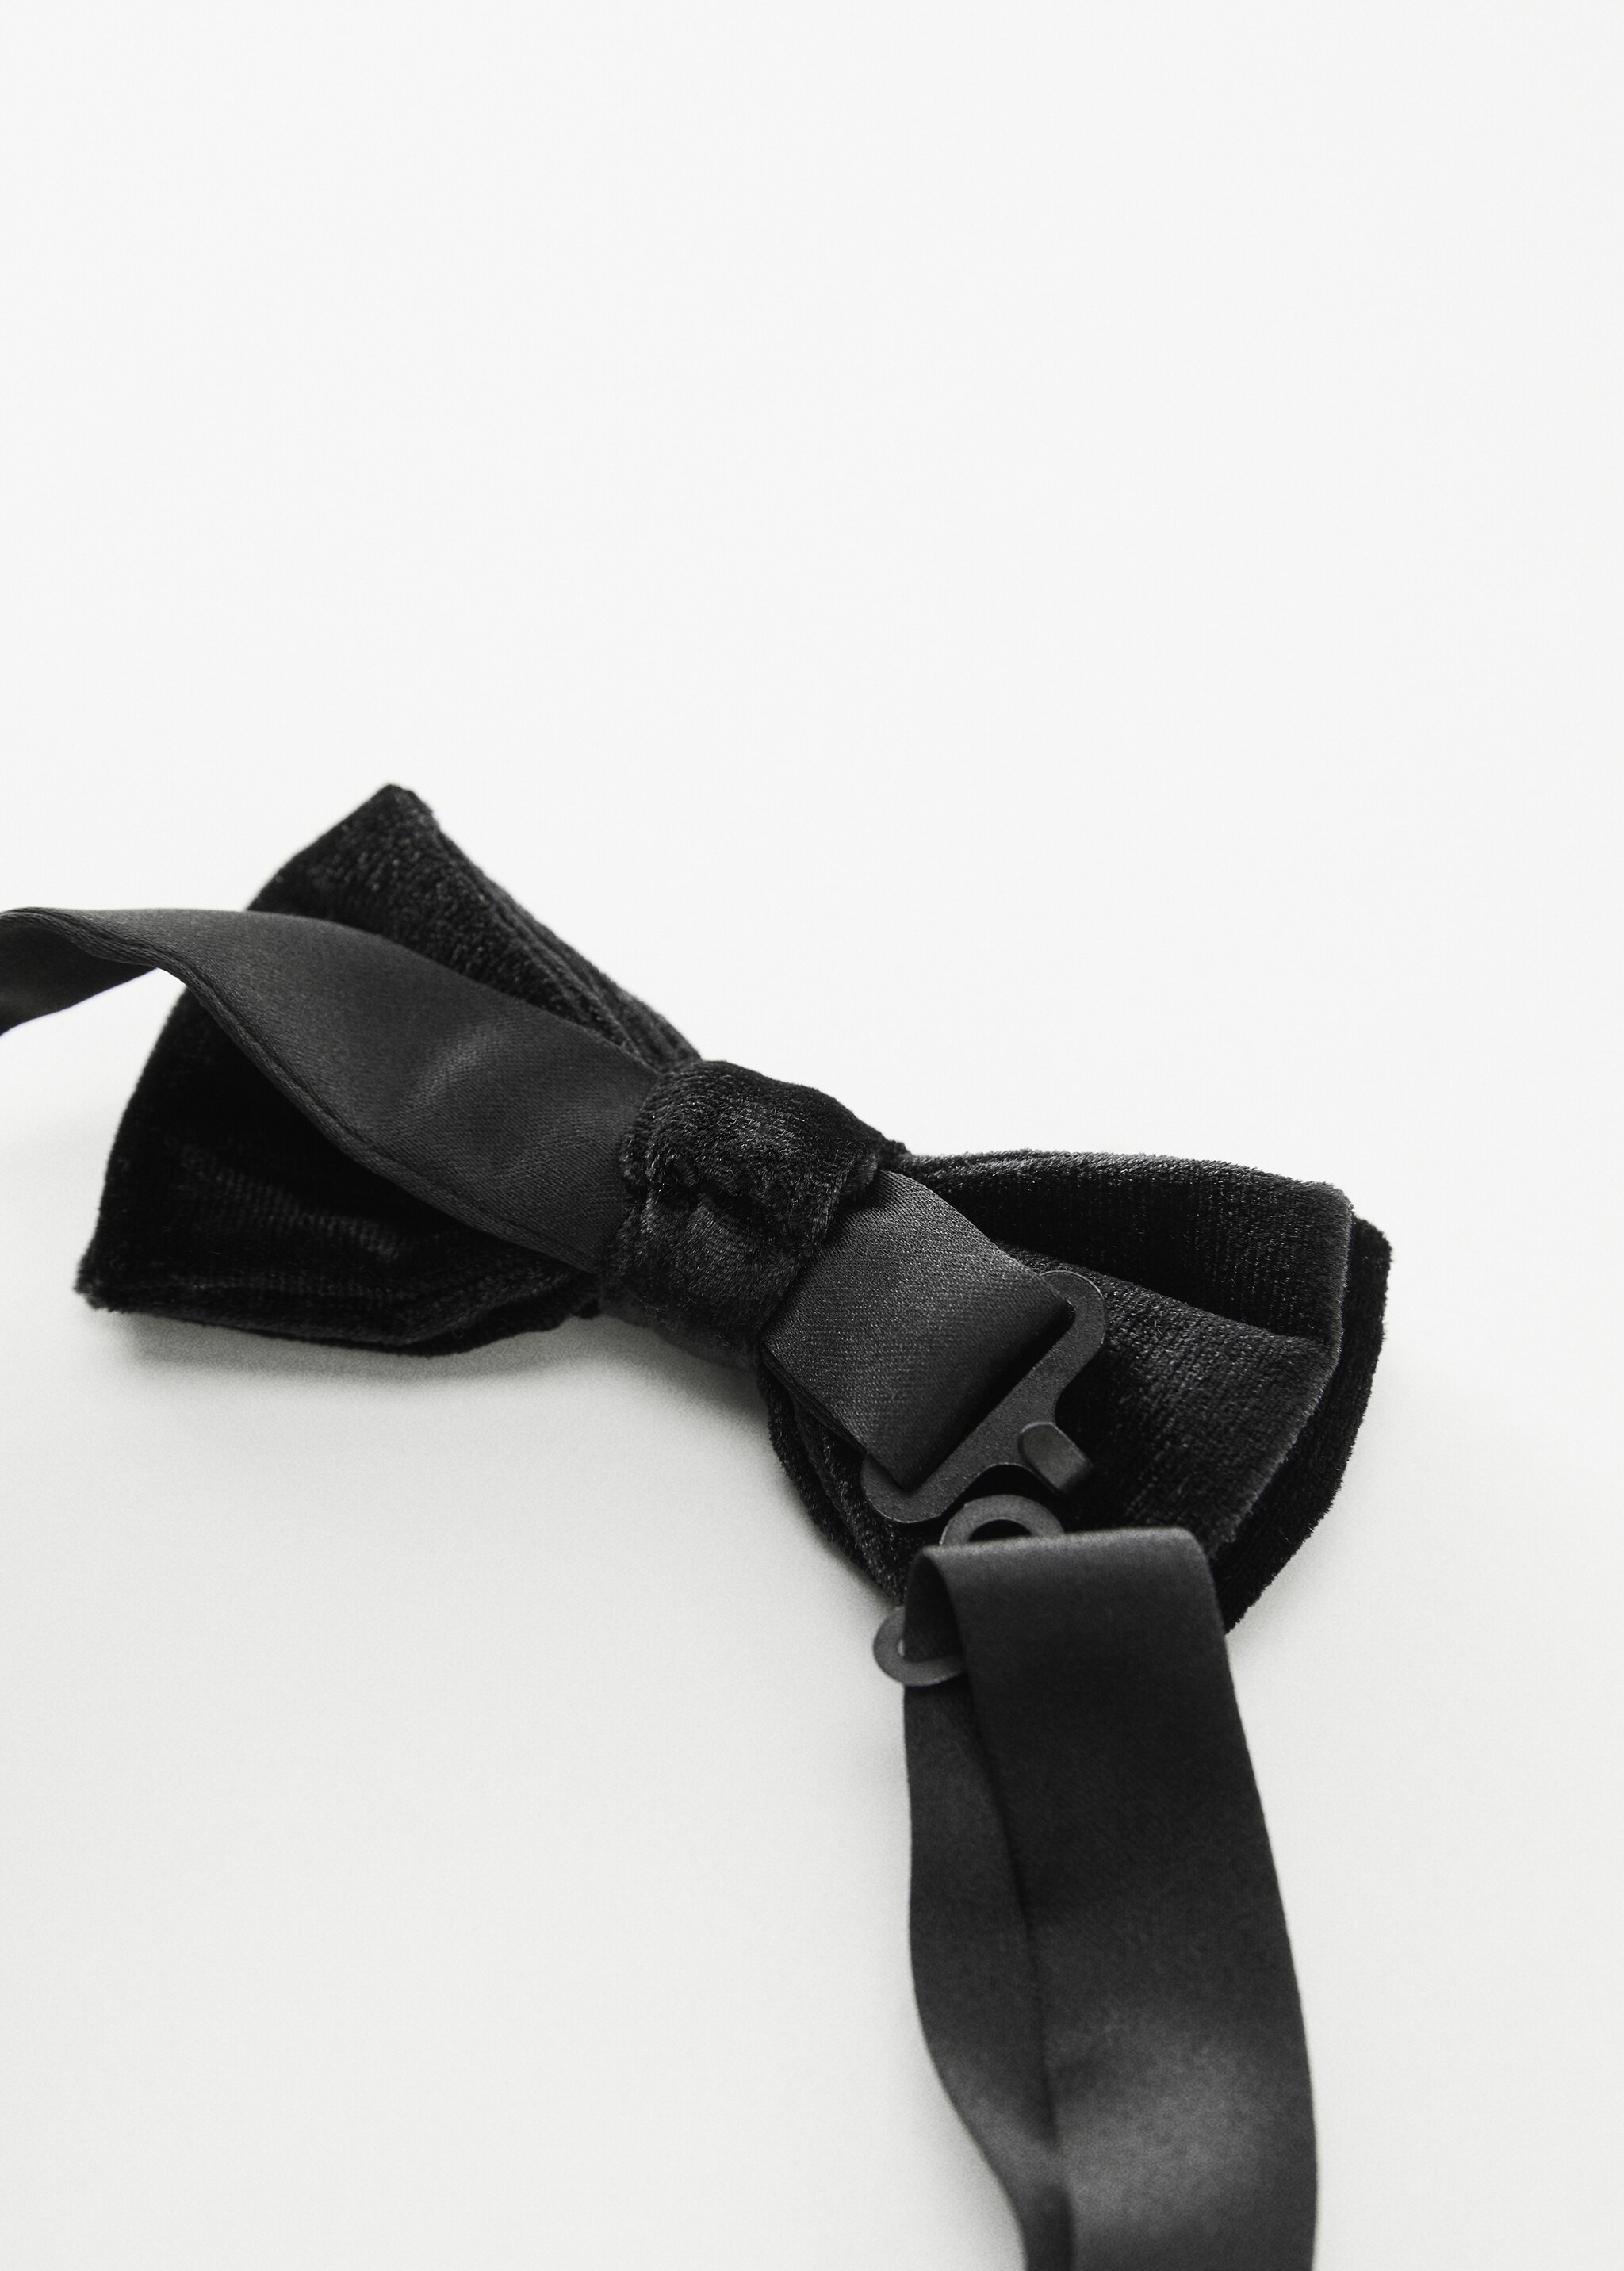 Velvet bow tie - Details of the article 1